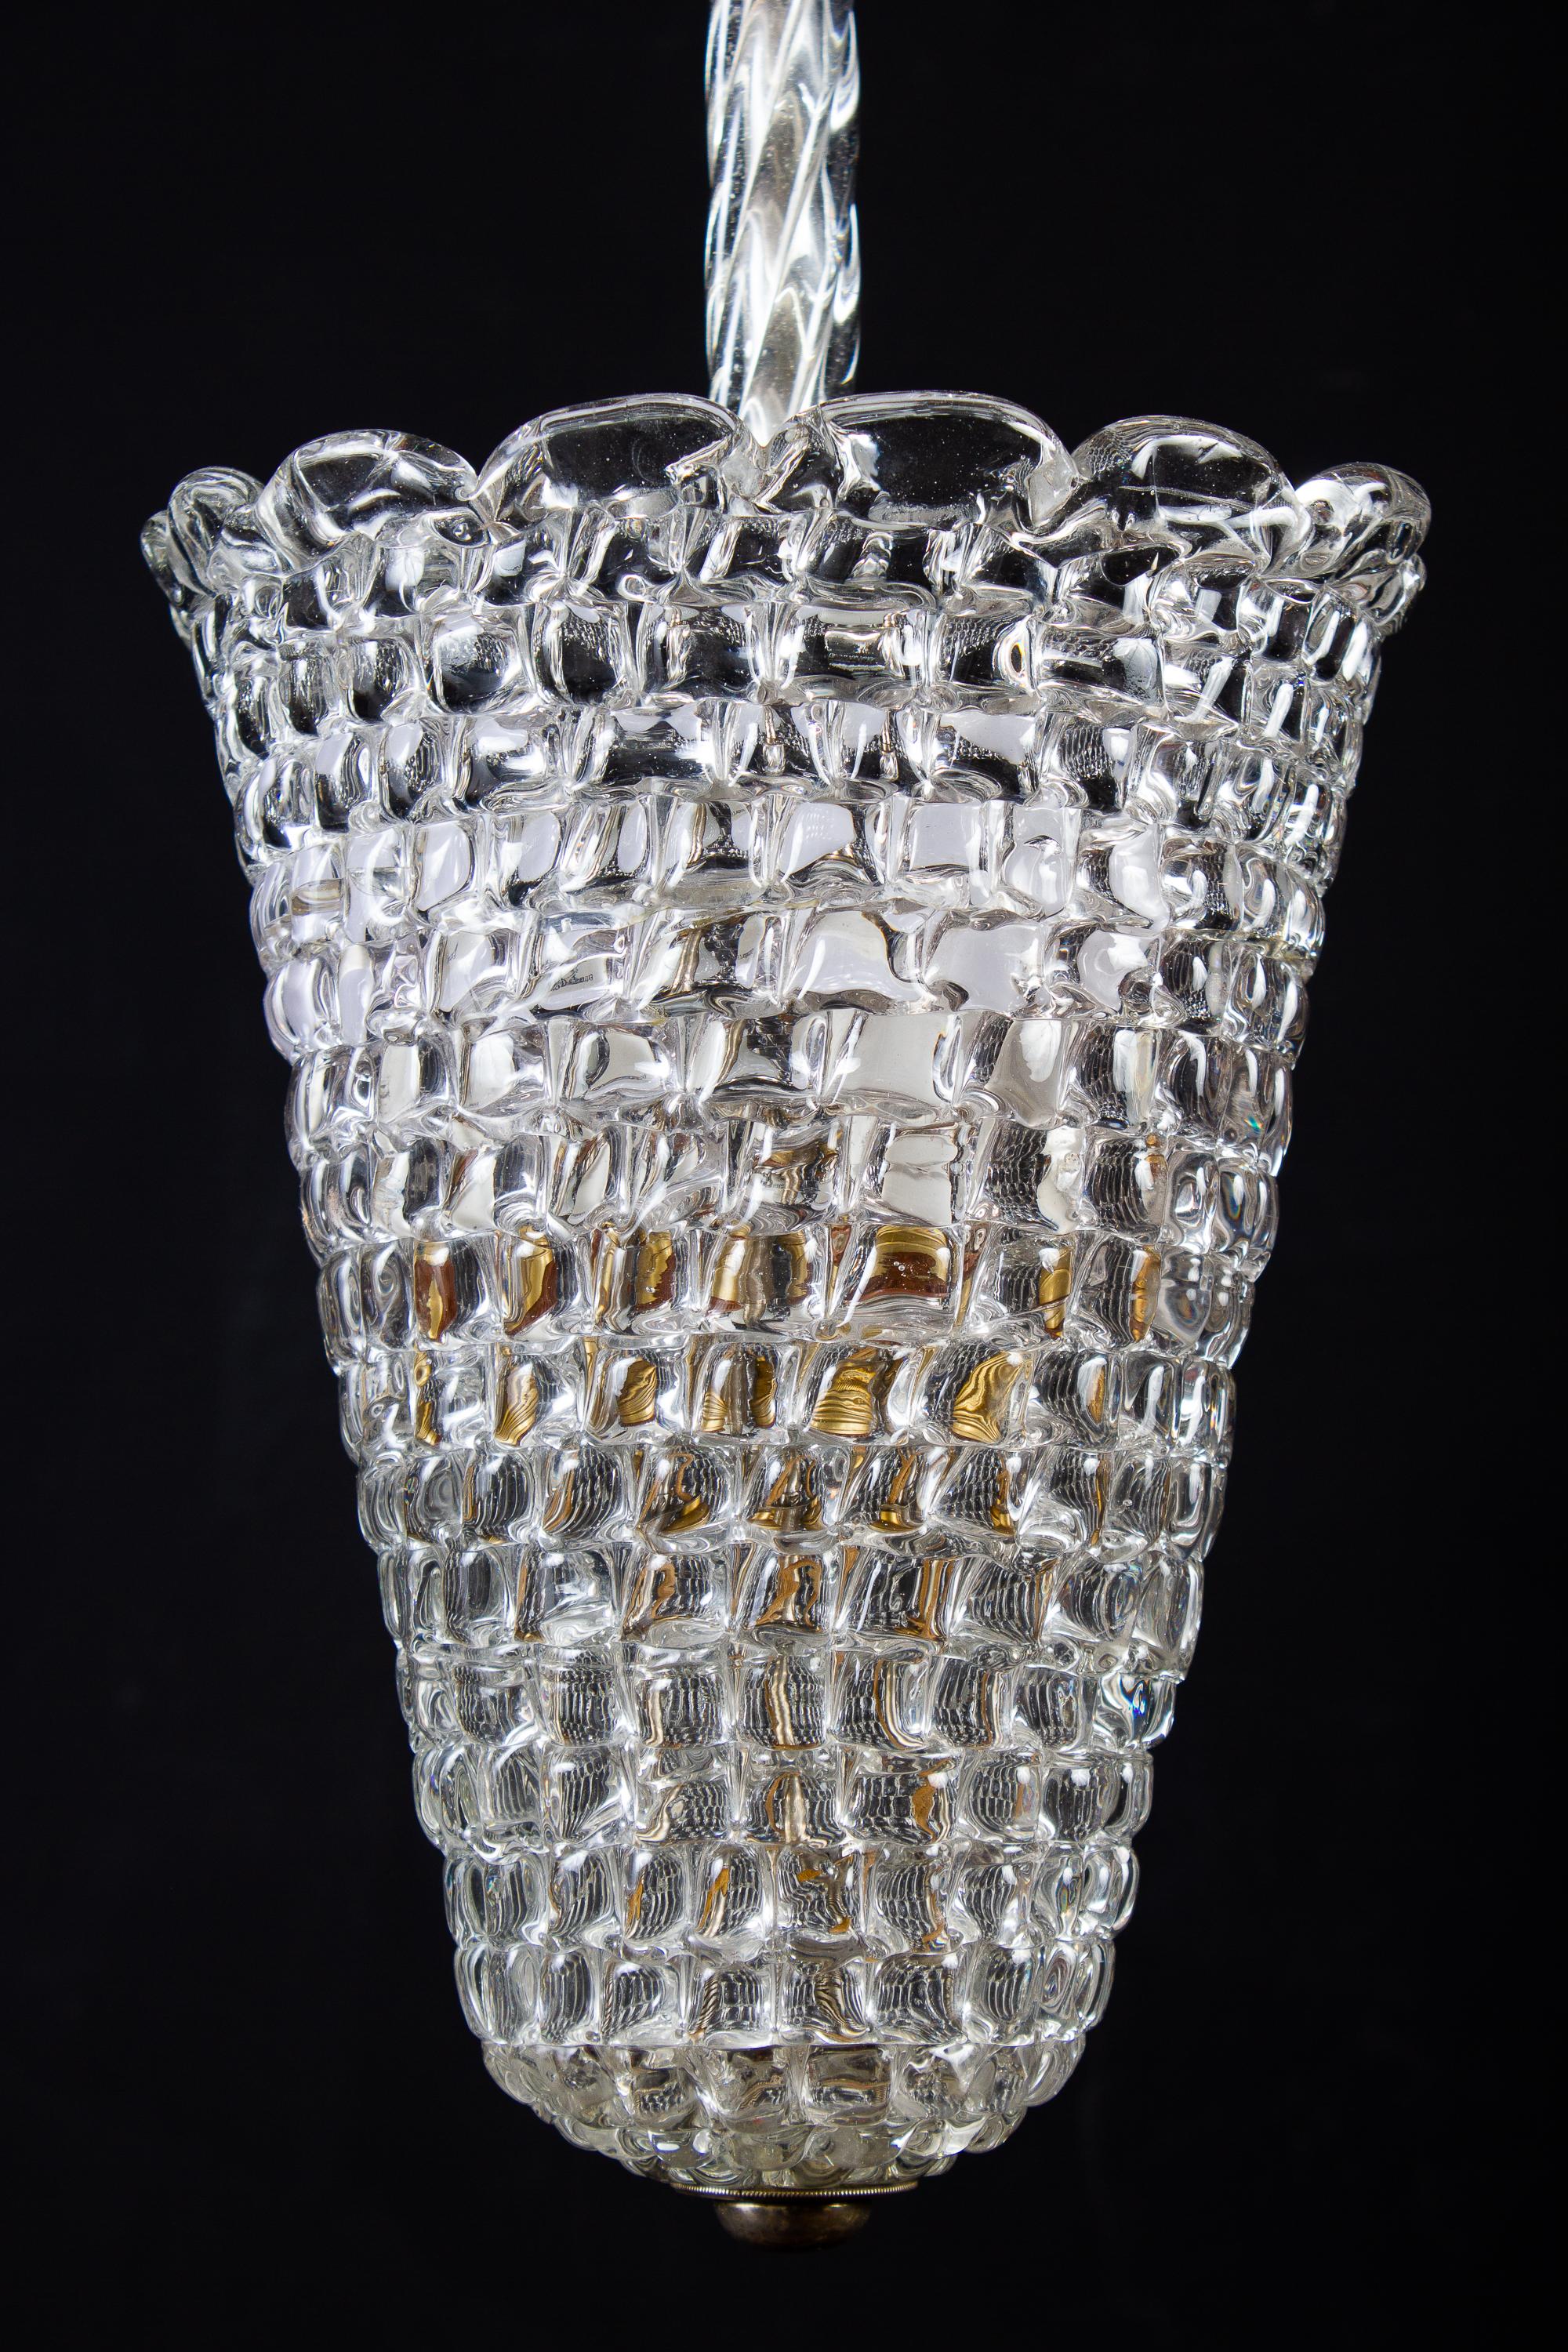 Amazing Barovier hand blown glass pendant lantern, 1930s.
Three E 14 light bulbs.